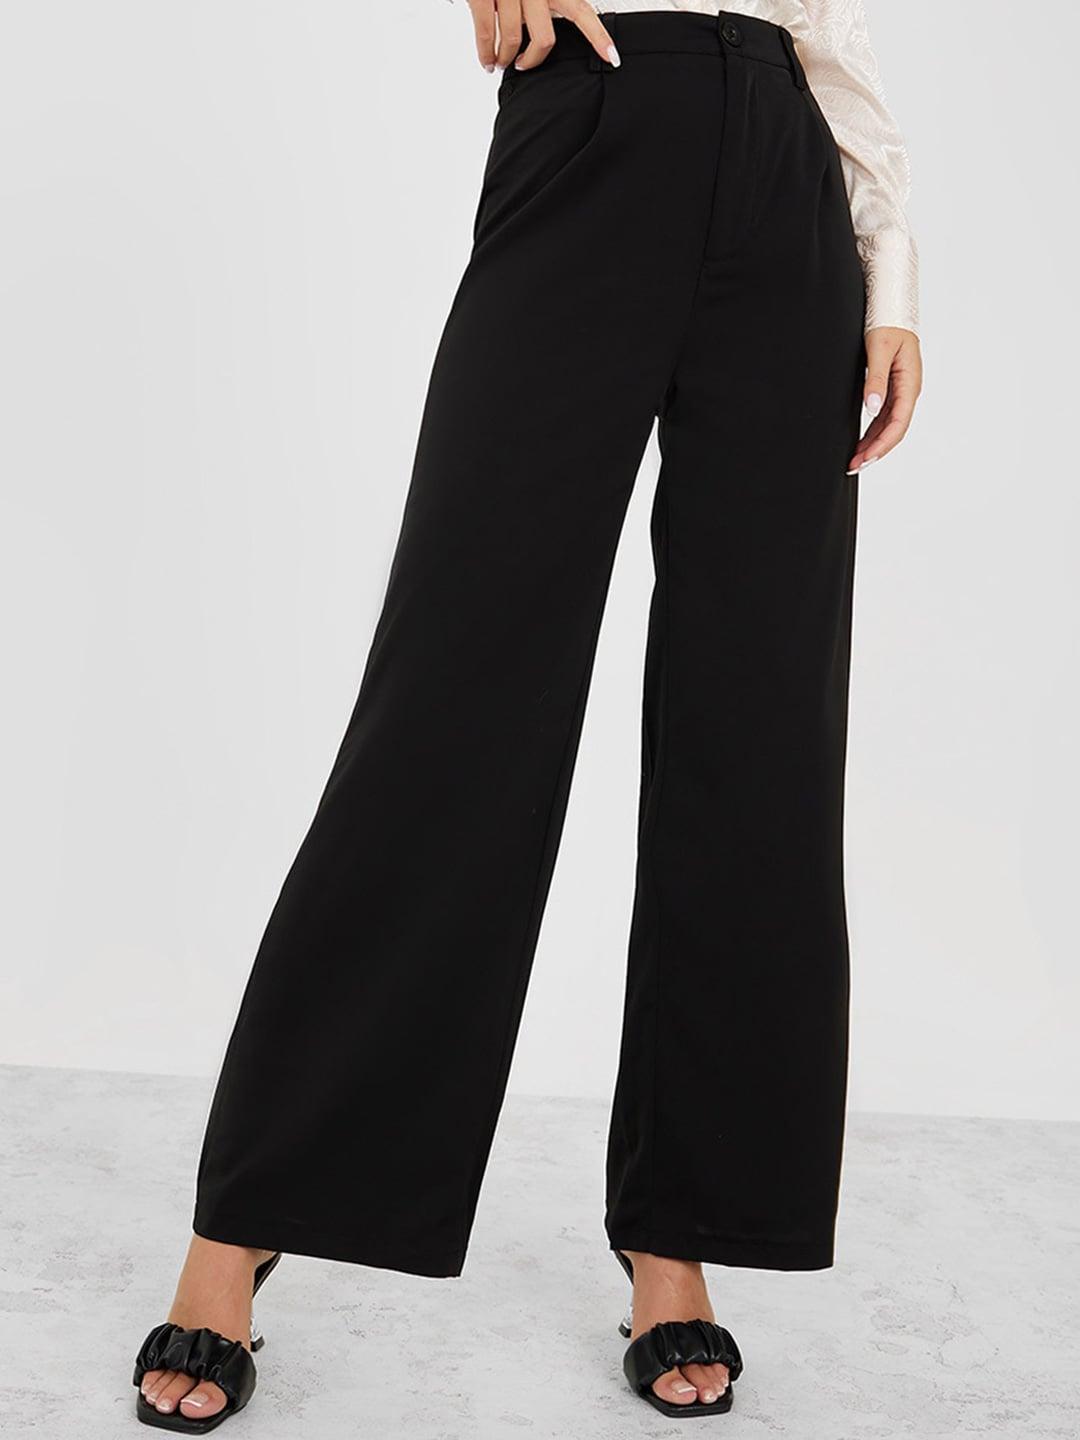 styli-women-high-rise-flared-trousers